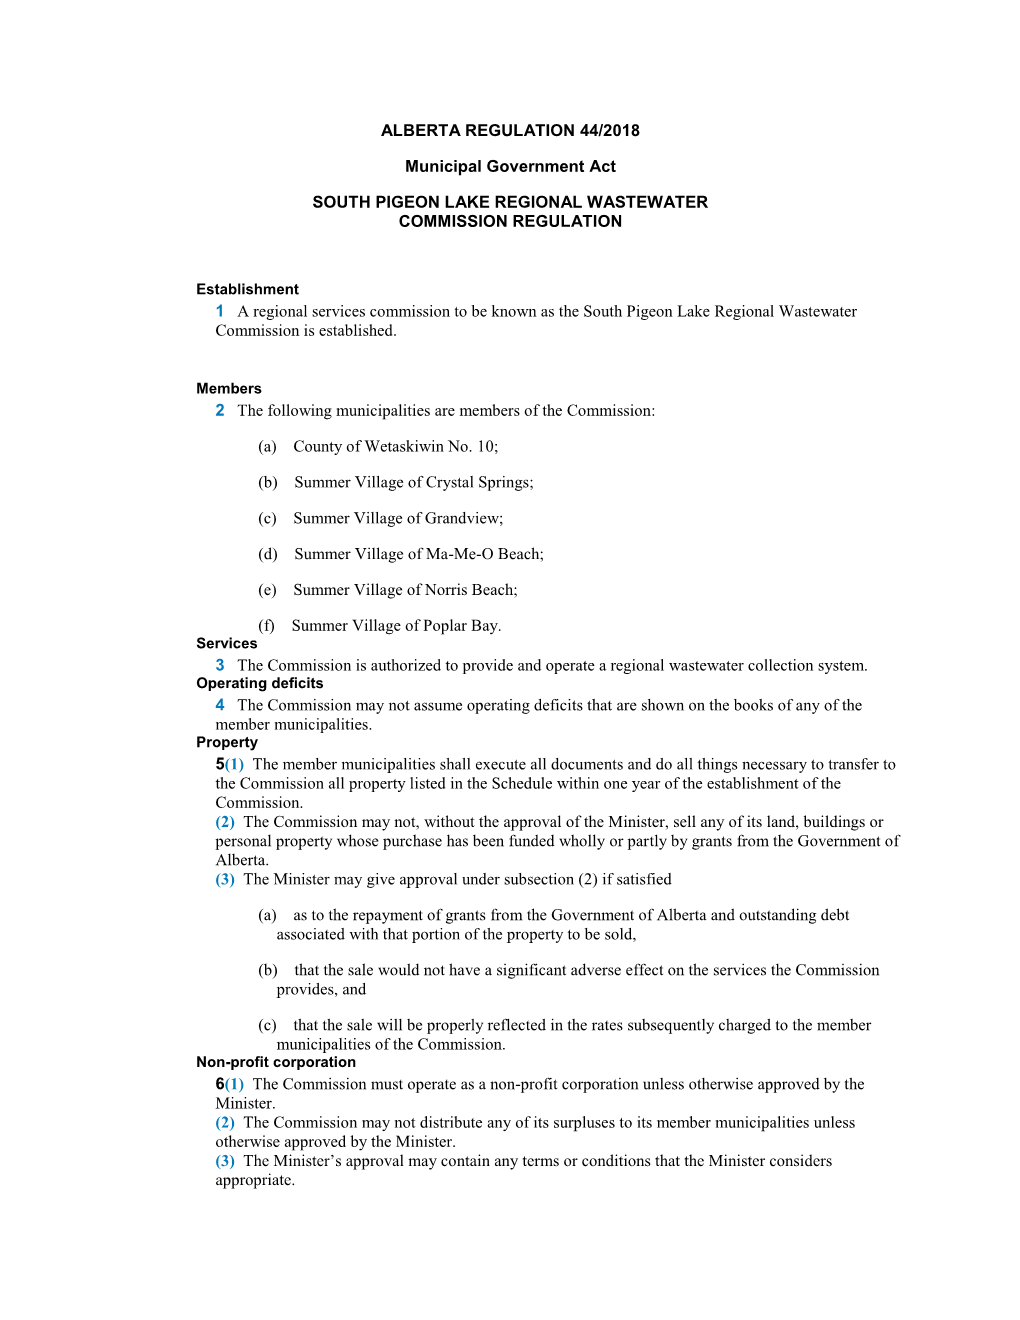 ALBERTA REGULATION 44/2018 Municipal Government Act SOUTH